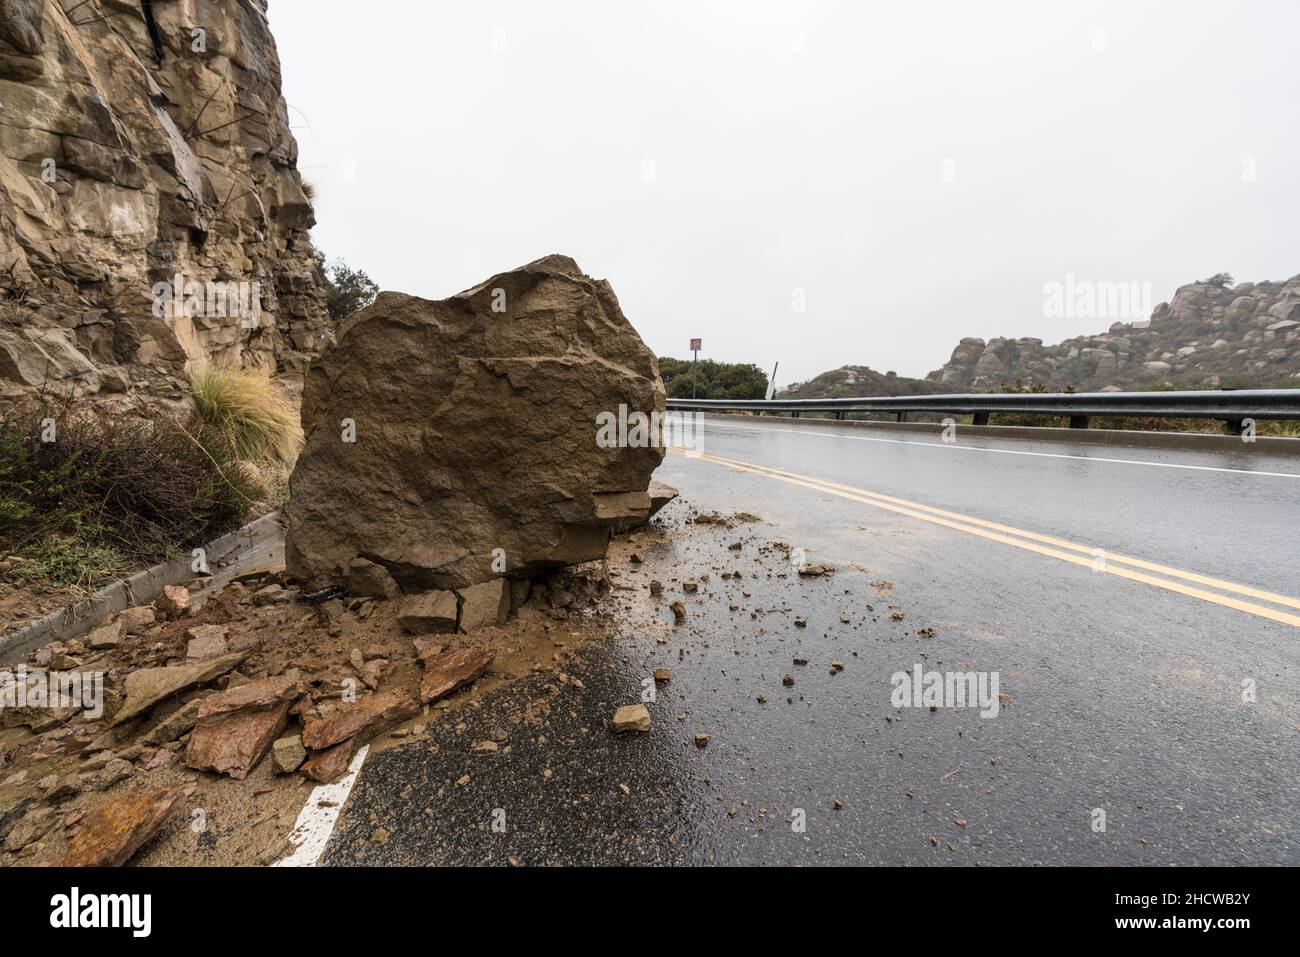 Landslide boulder blocking traffic lane on Santa Susana Pass Road in the Chatsworth area of Los Angeles, California. Stock Photo